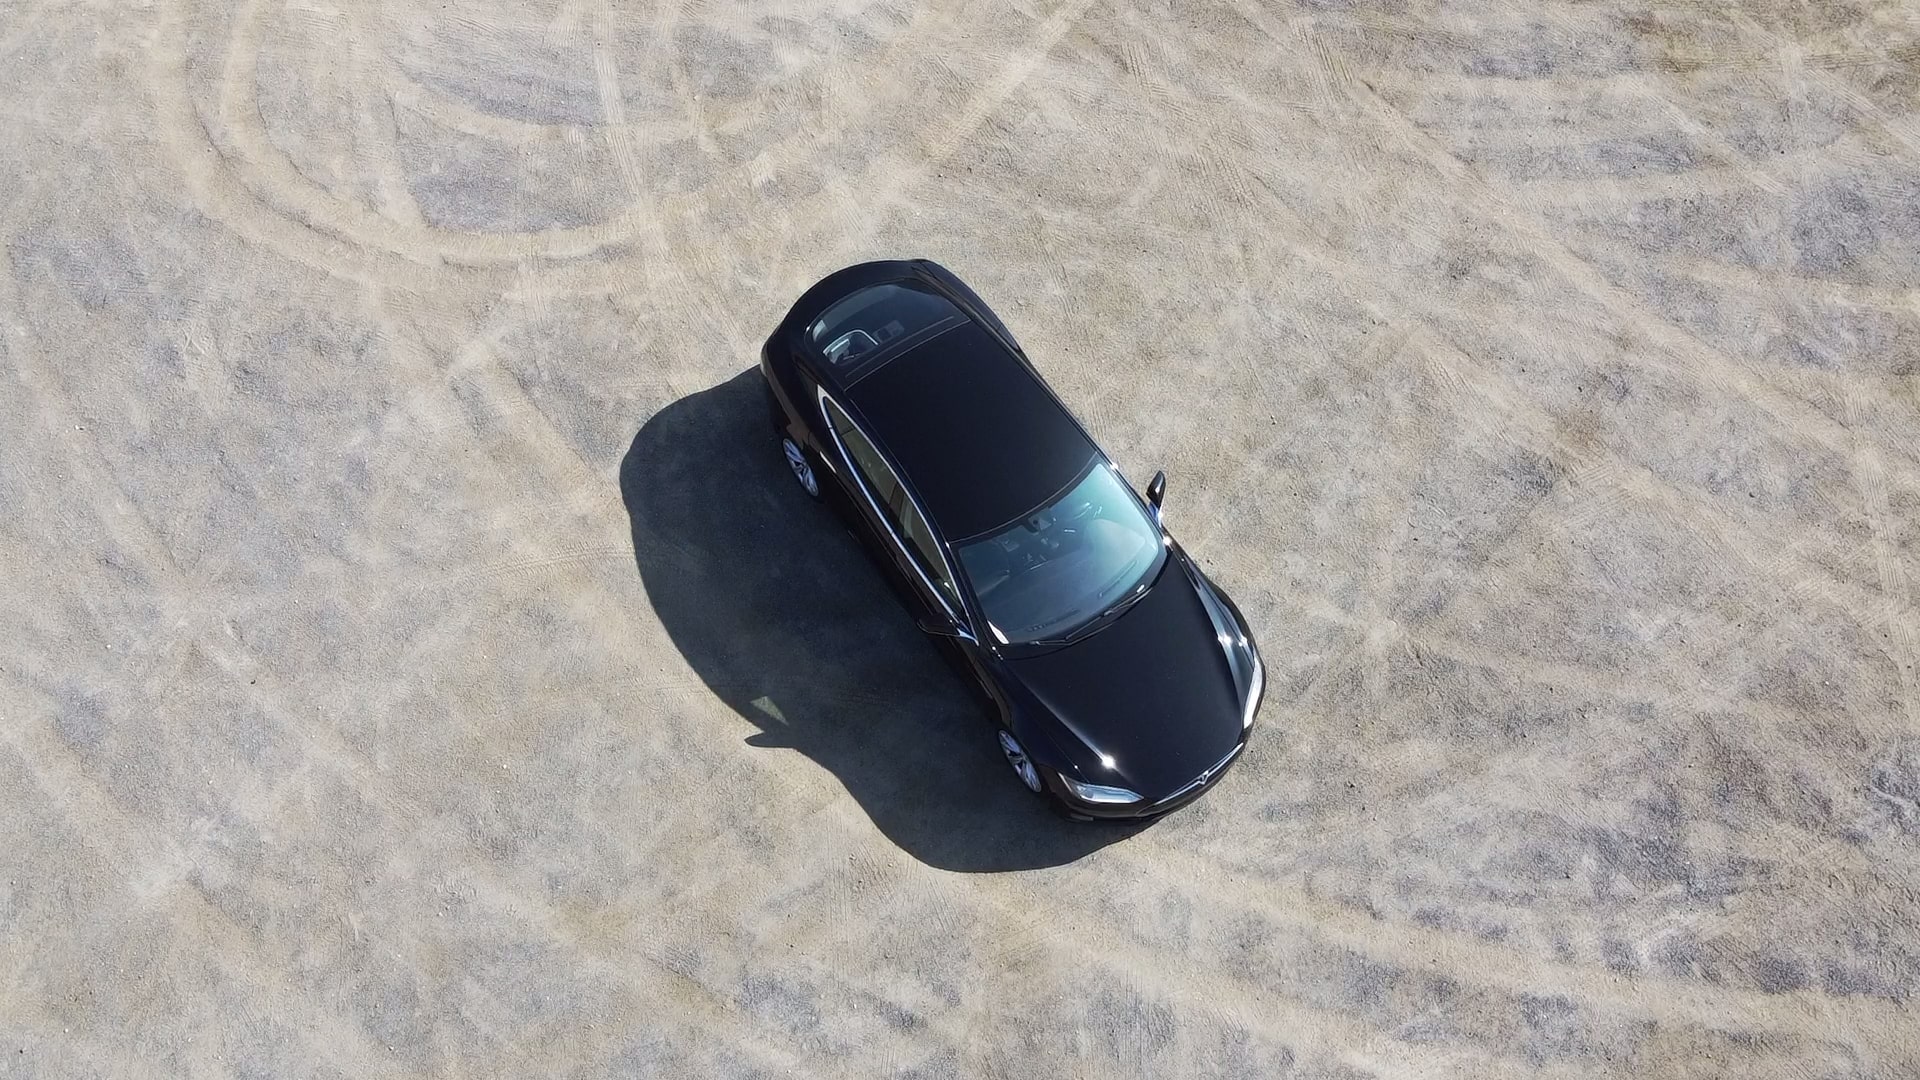 A roof-down shot of a black Model S EV